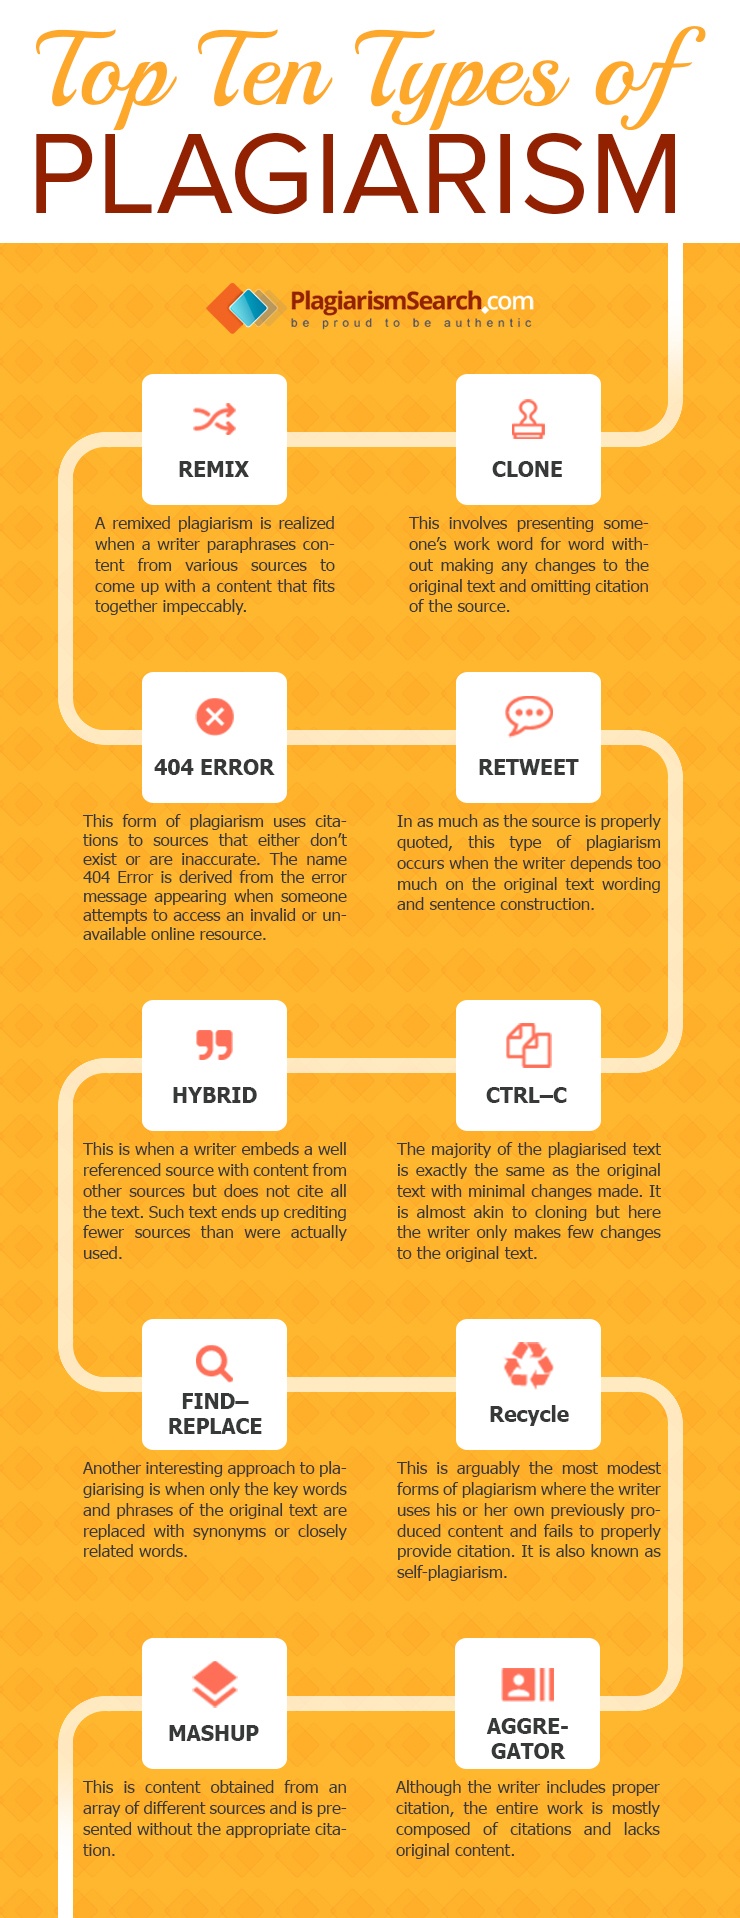 Top Ten Types of Plagiarism Infographic